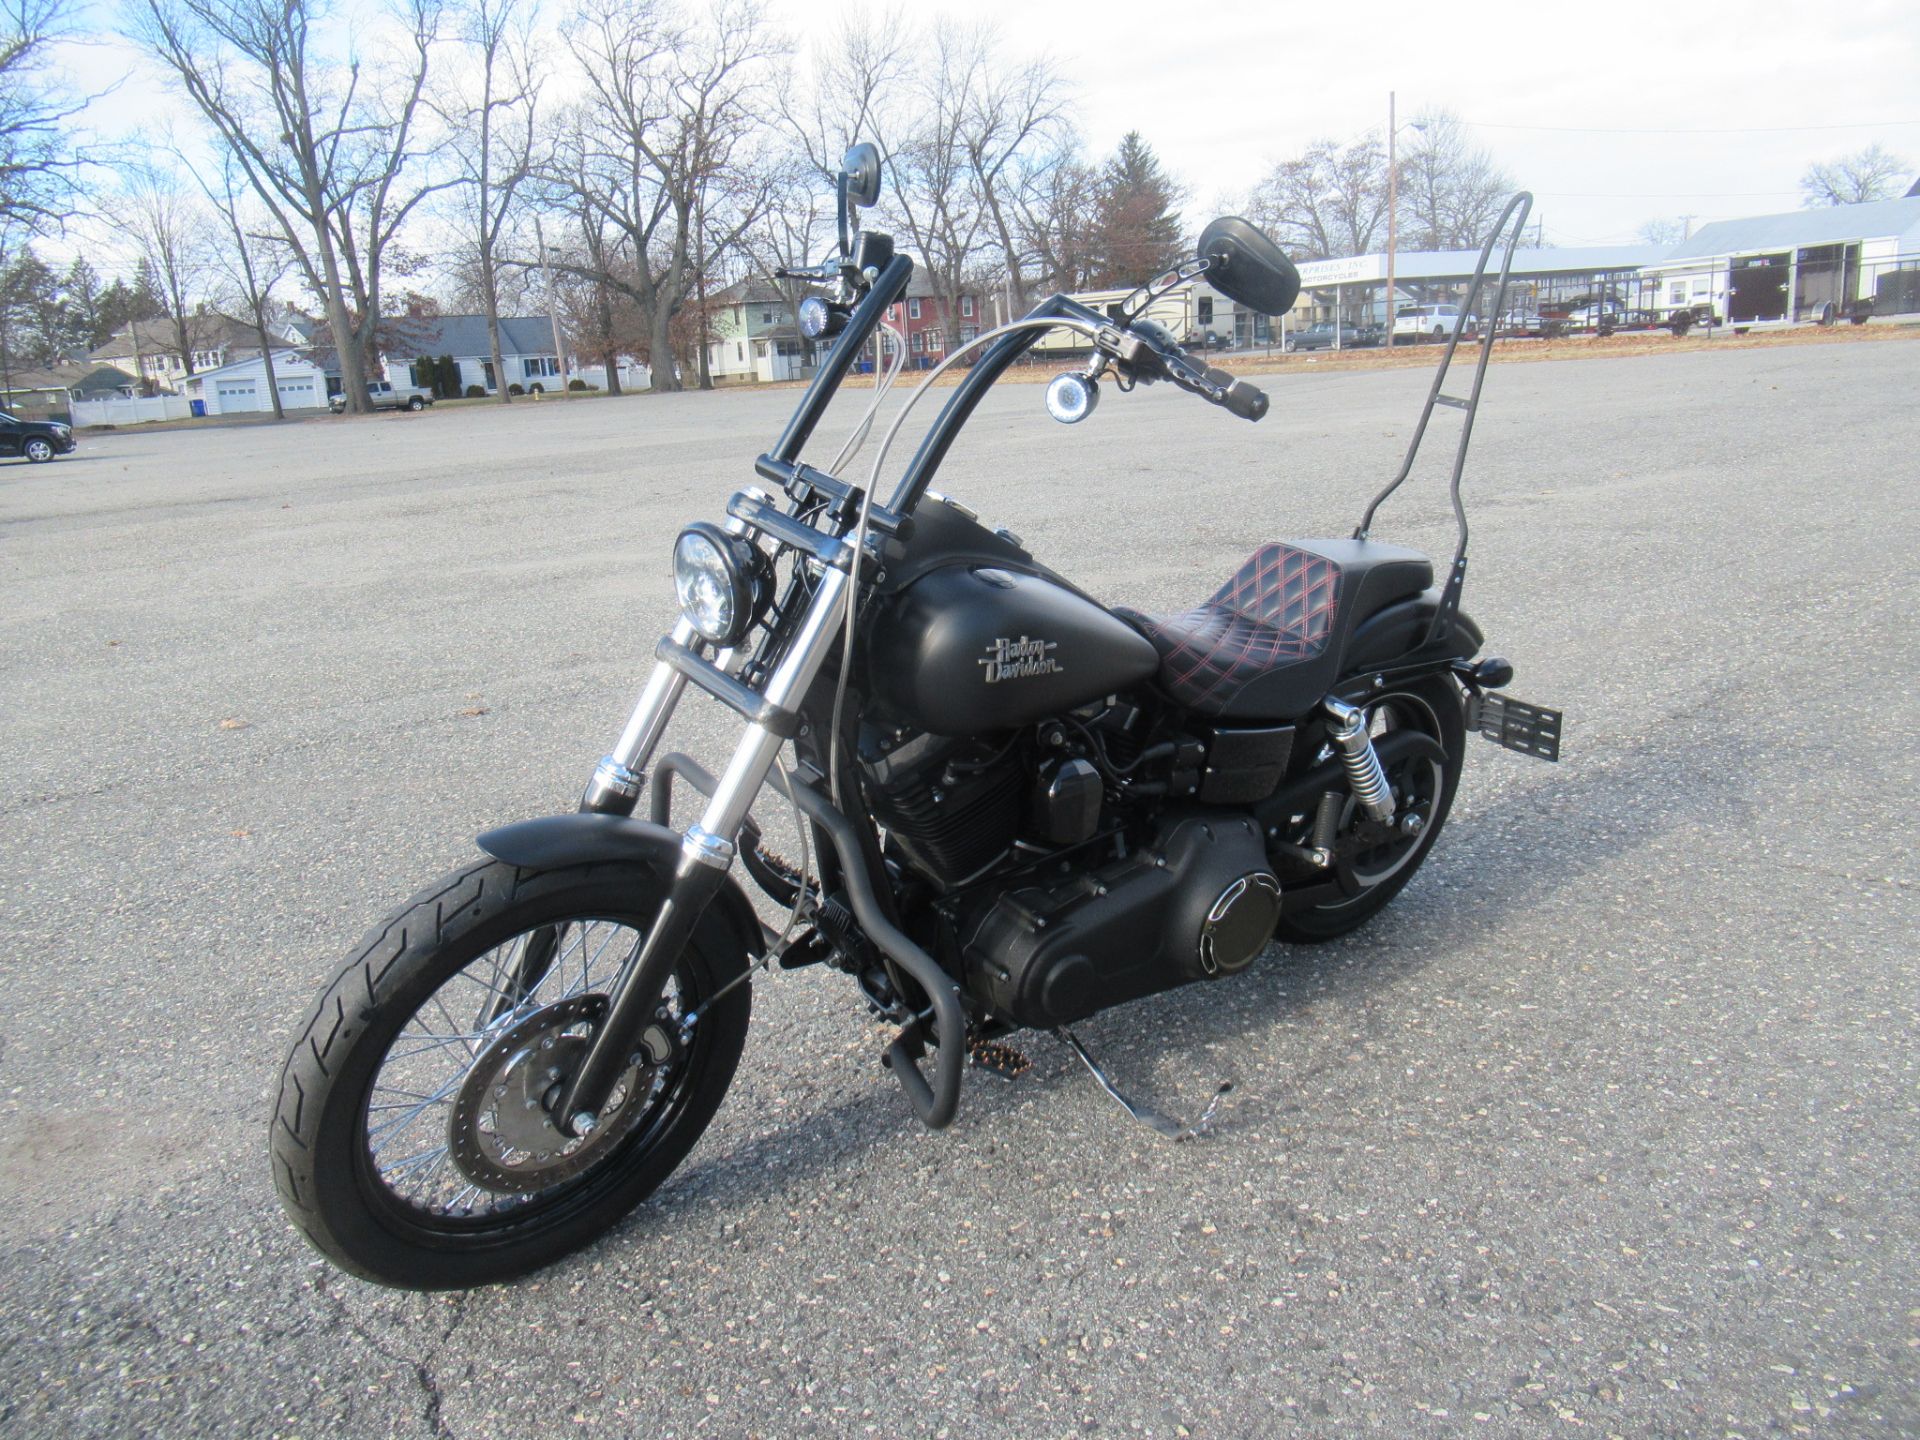 2013 Harley-Davidson Dyna® Street Bob® in Springfield, Massachusetts - Photo 6